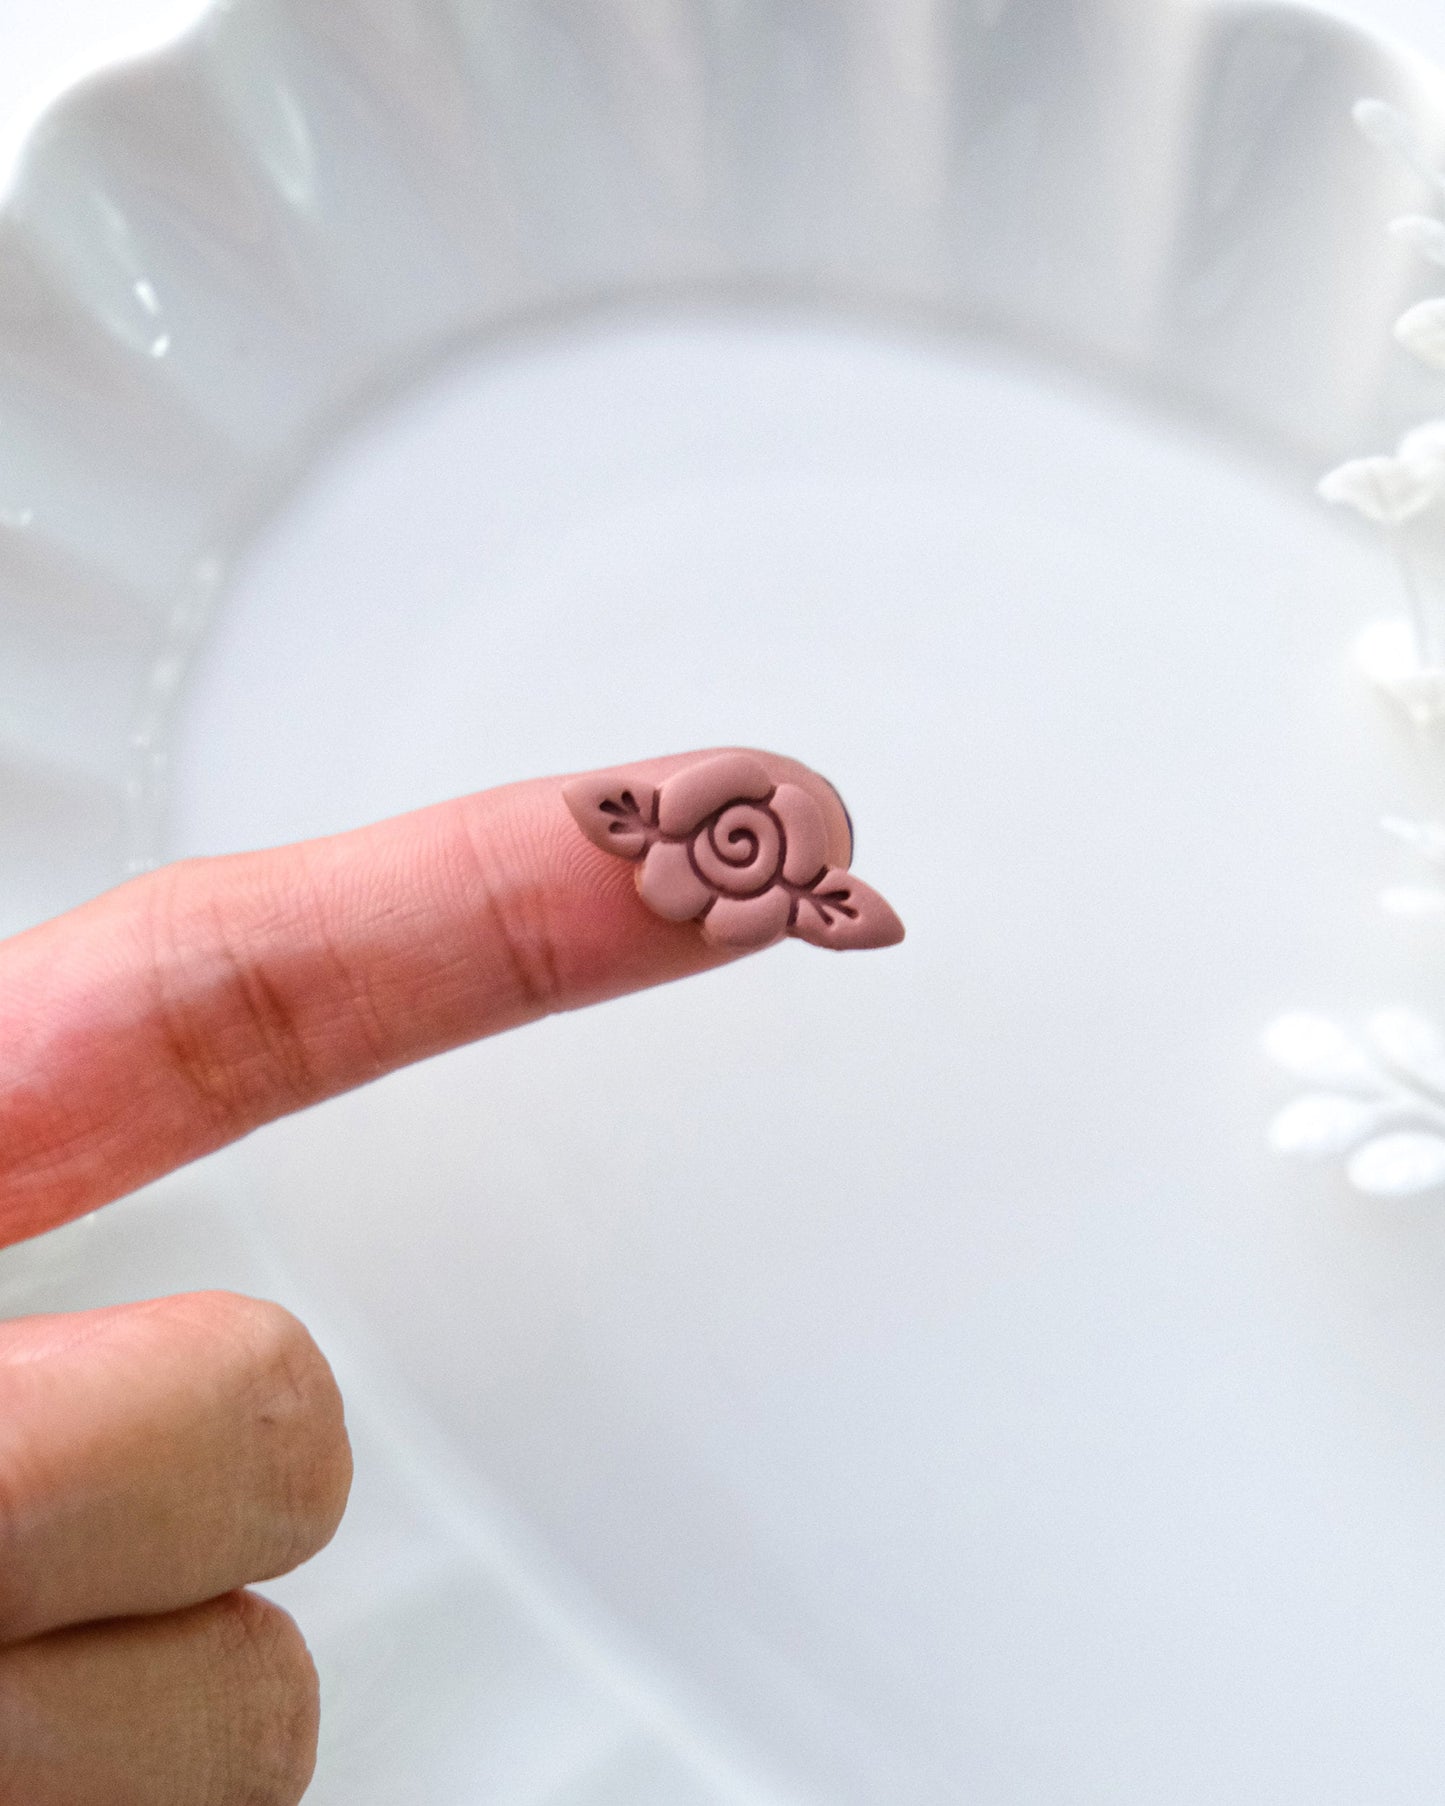 Rose Flower Mini Polymer Clay Cutter